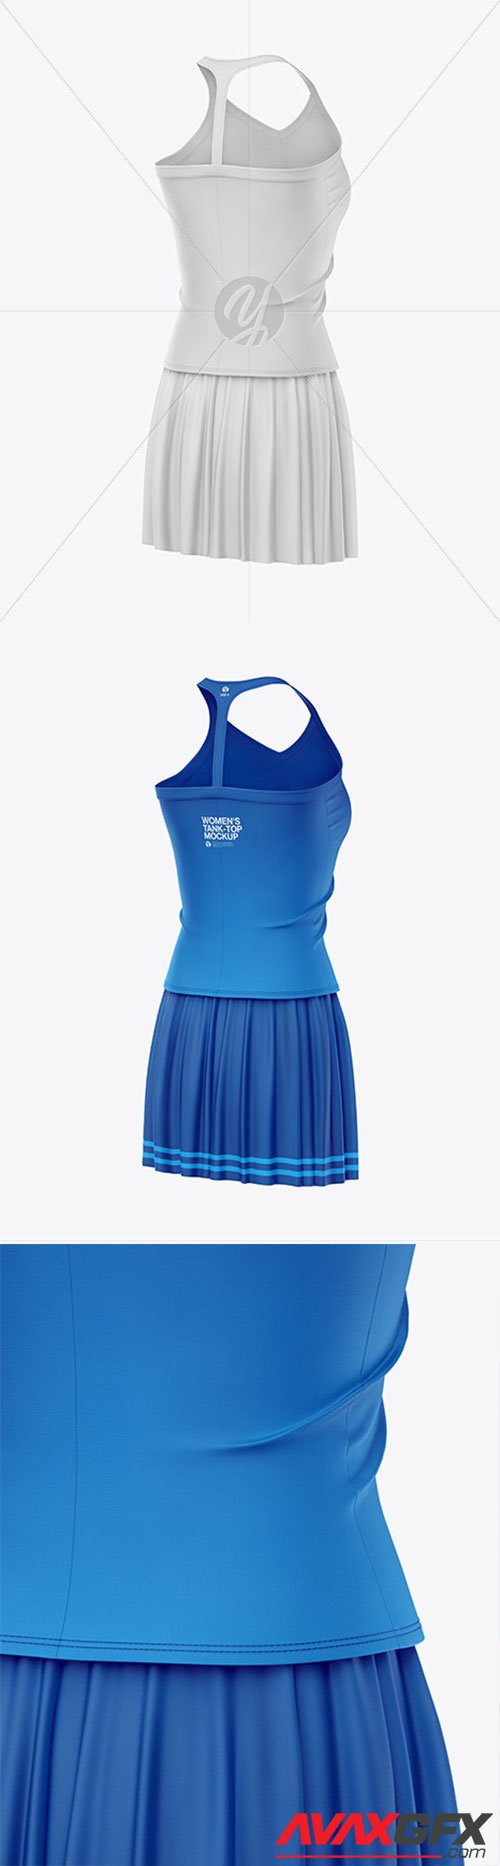 Women's Tennis Clothing Set Mockup 60732